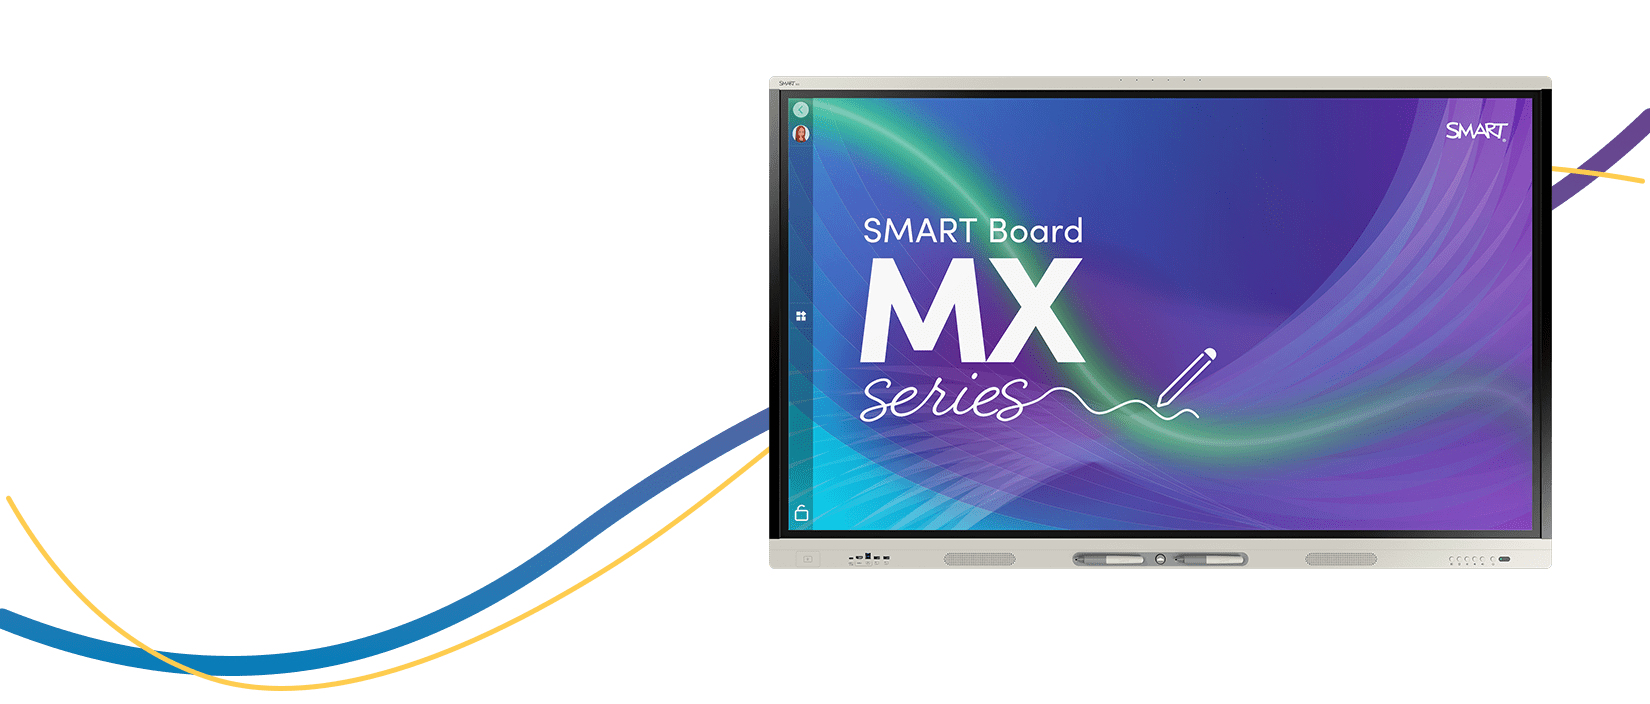 Ecran interactif SMART Board MX200-V3 Formation